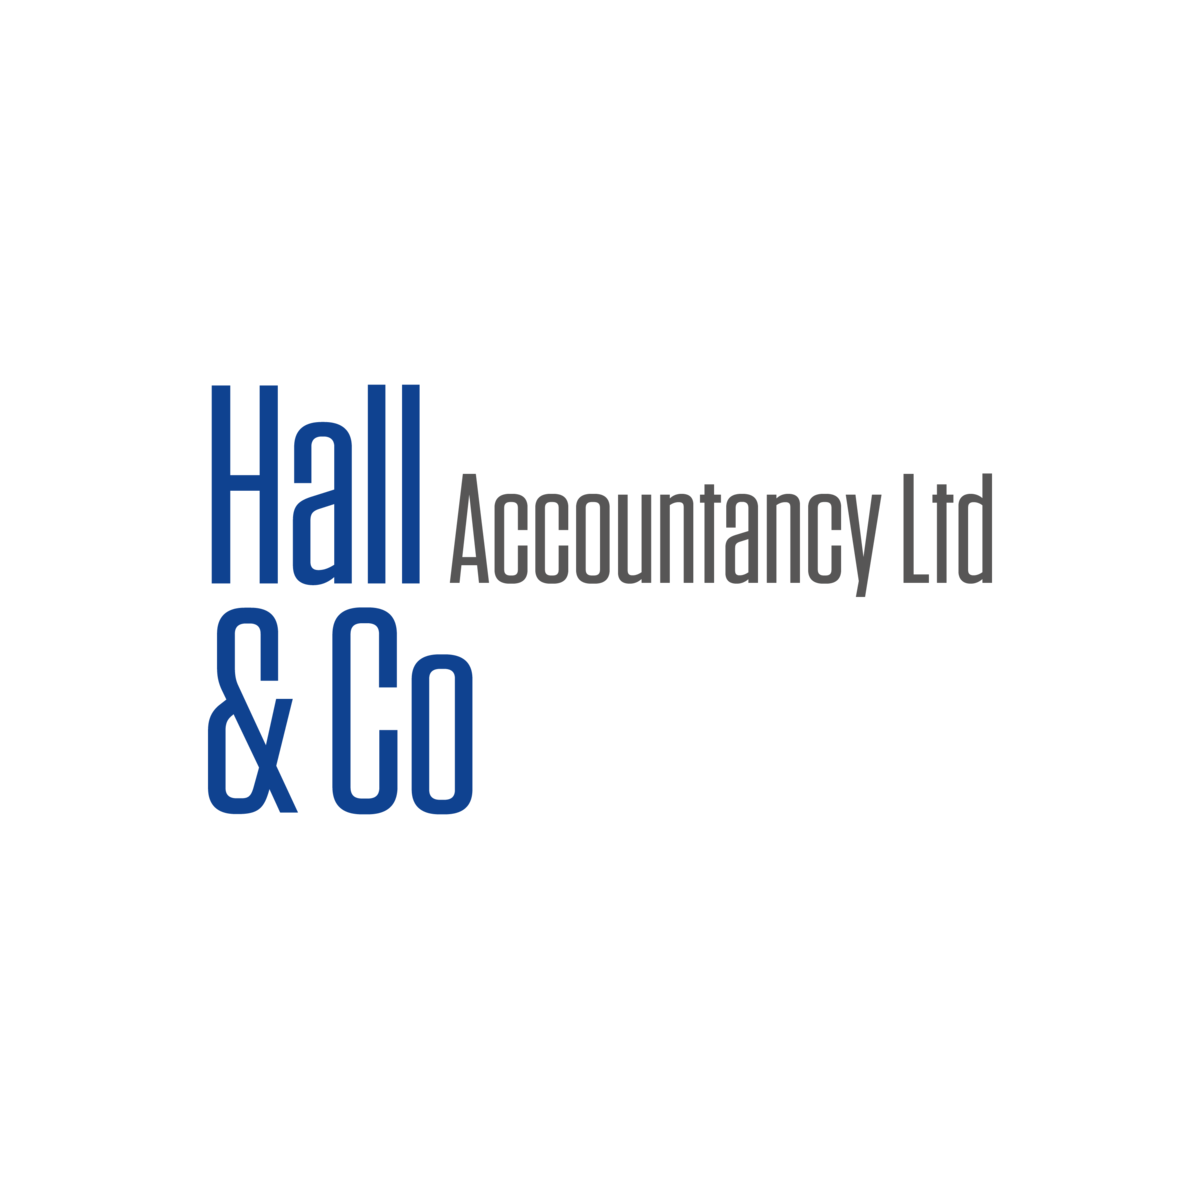 Hall & Co Accountancy Ltd